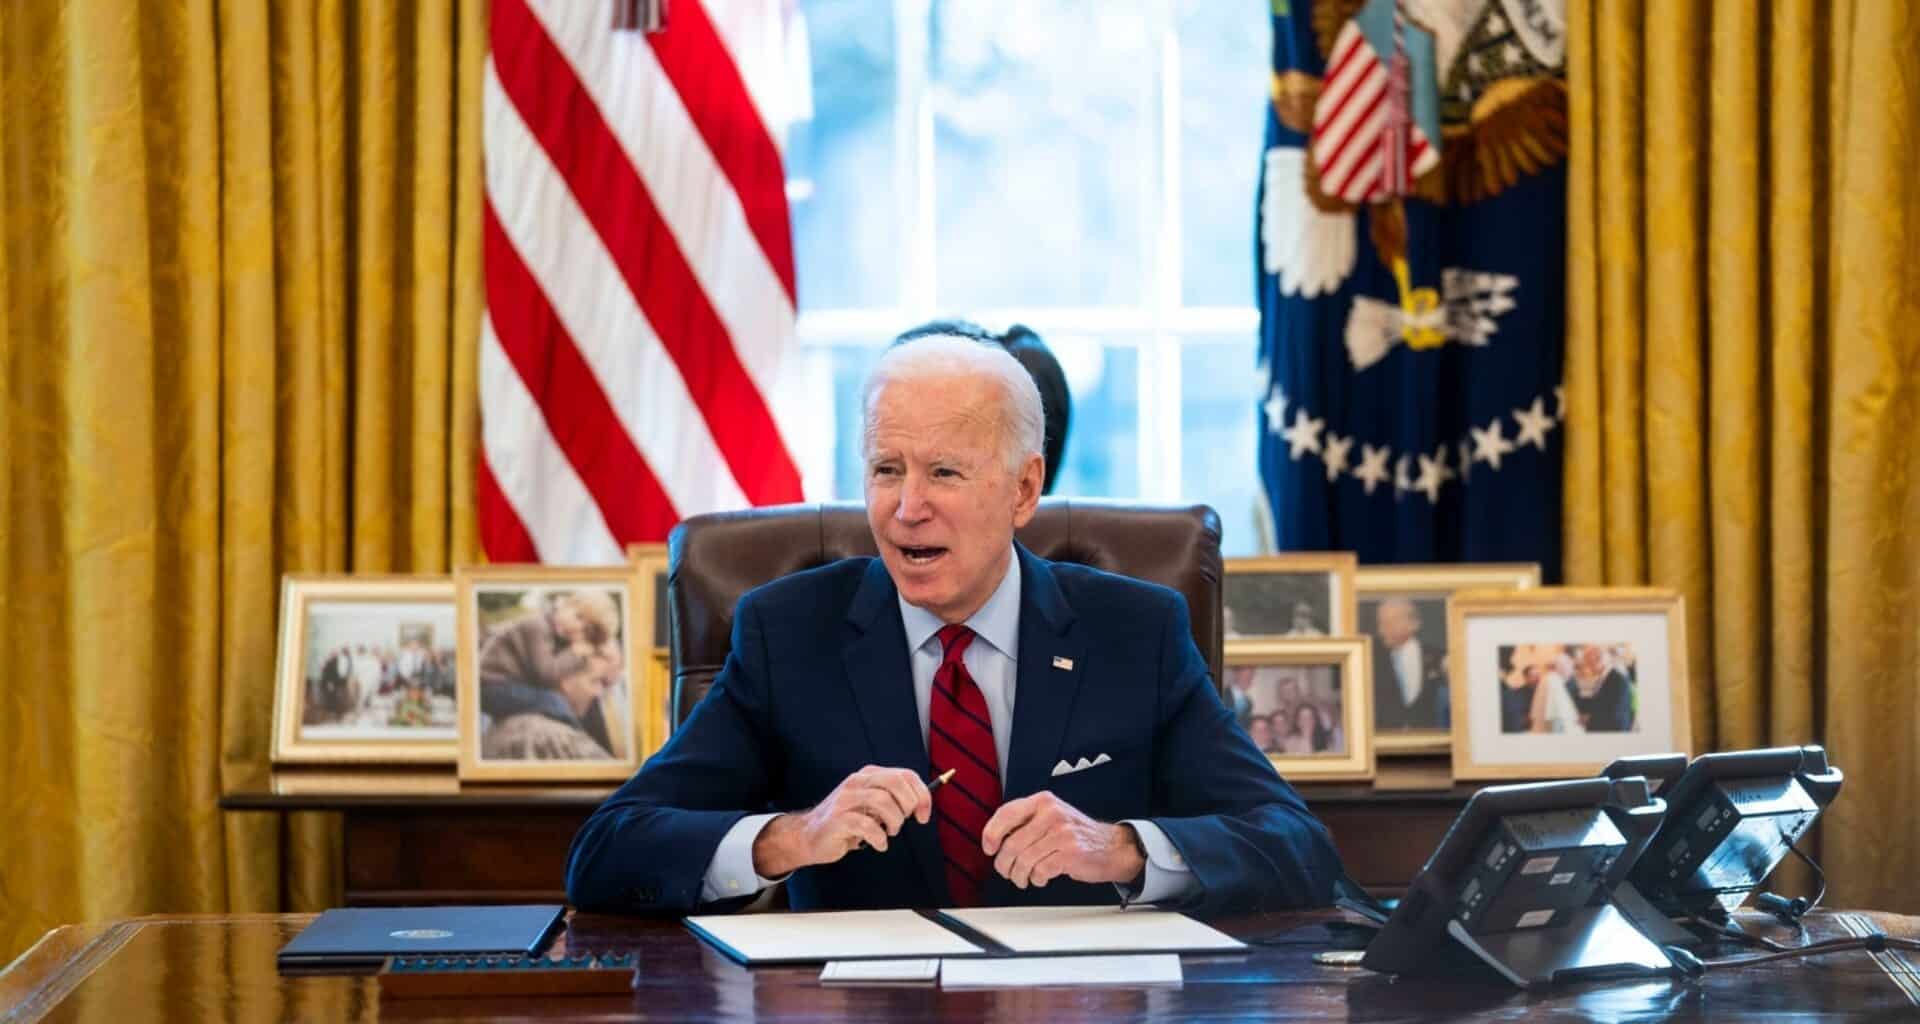 Presidente Joe Biden dos Estados Unidos assinando decretos no Salão Oval